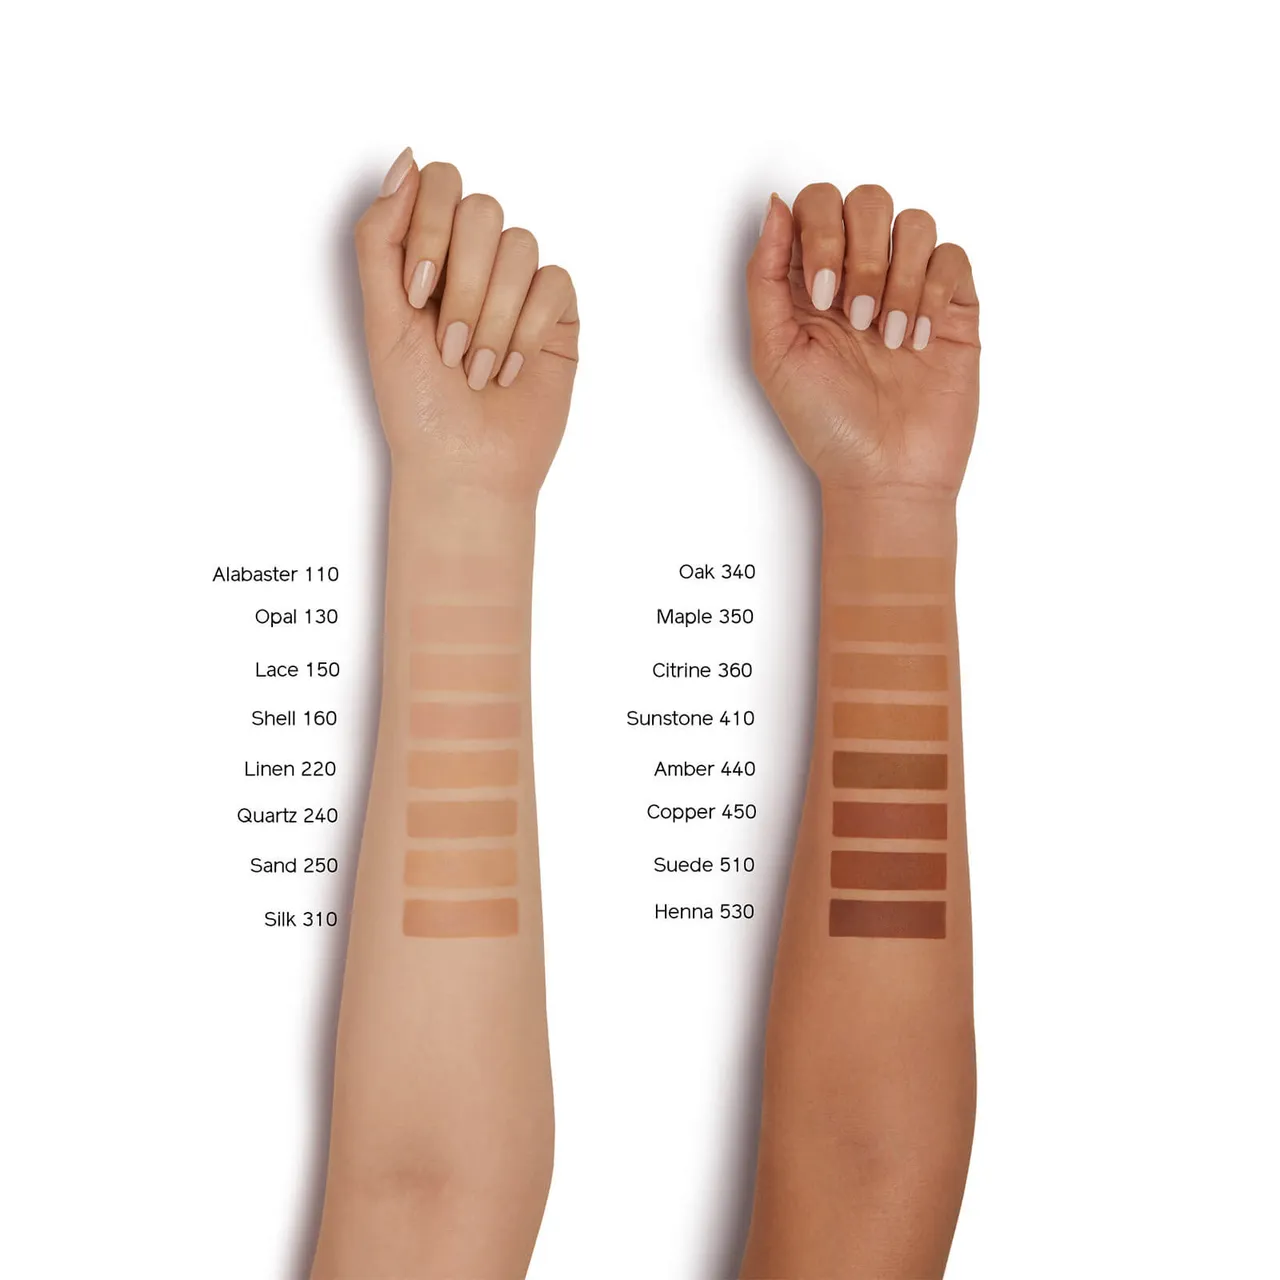 Shiseido Synchro Skin Self-Refreshing Custom Finish Powder Foundation 9g (Various Shades) - Sunstone